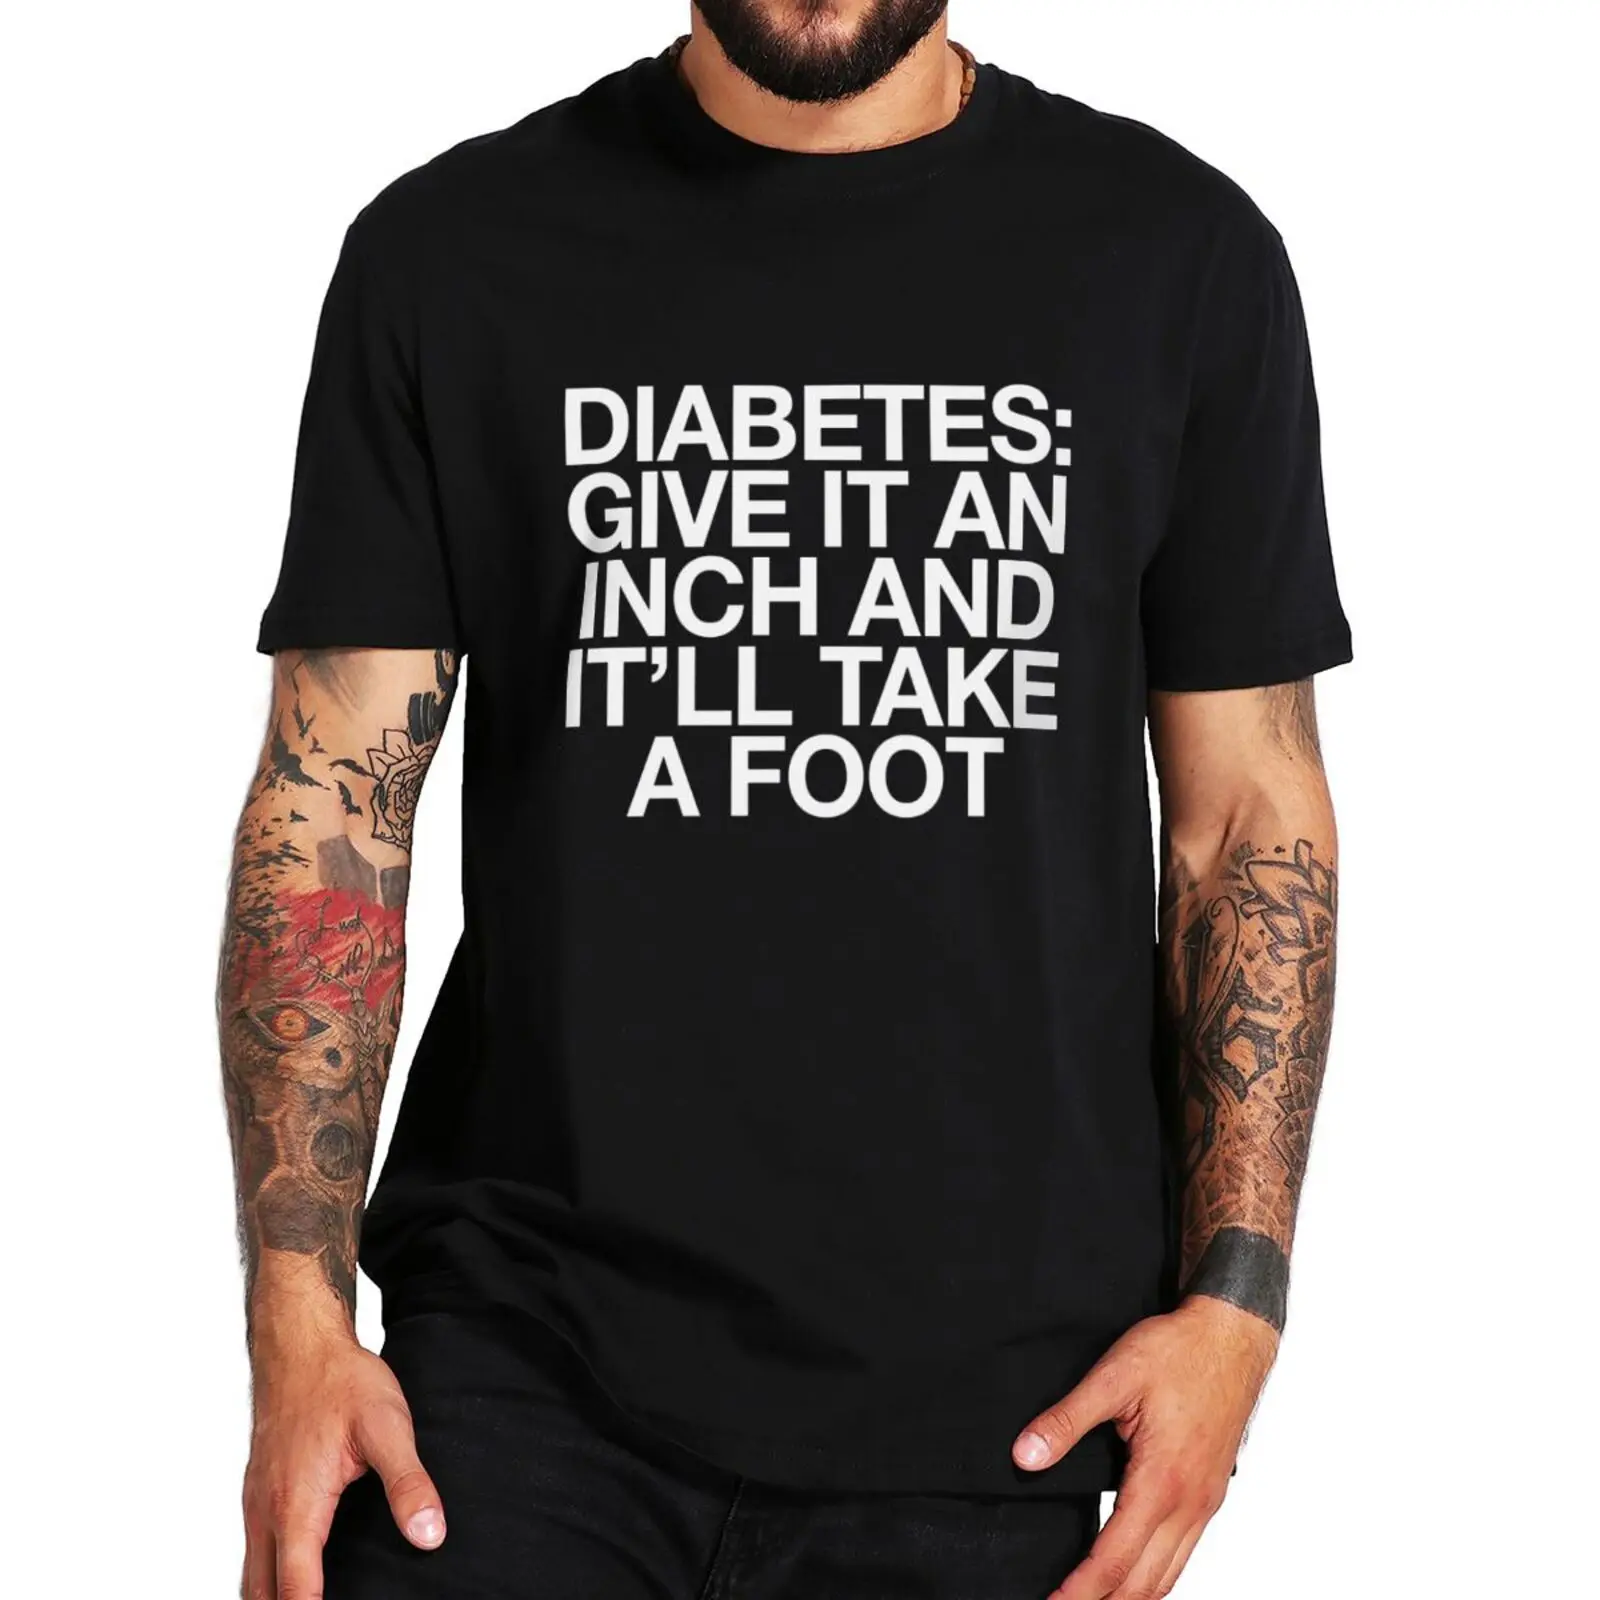 

Diabetes Give It An Inch T-Shirt Funny Joke Sarcastic Humor Short Sleeve 100% Cotton Unisex Oversized Casual T Shirts EU Size